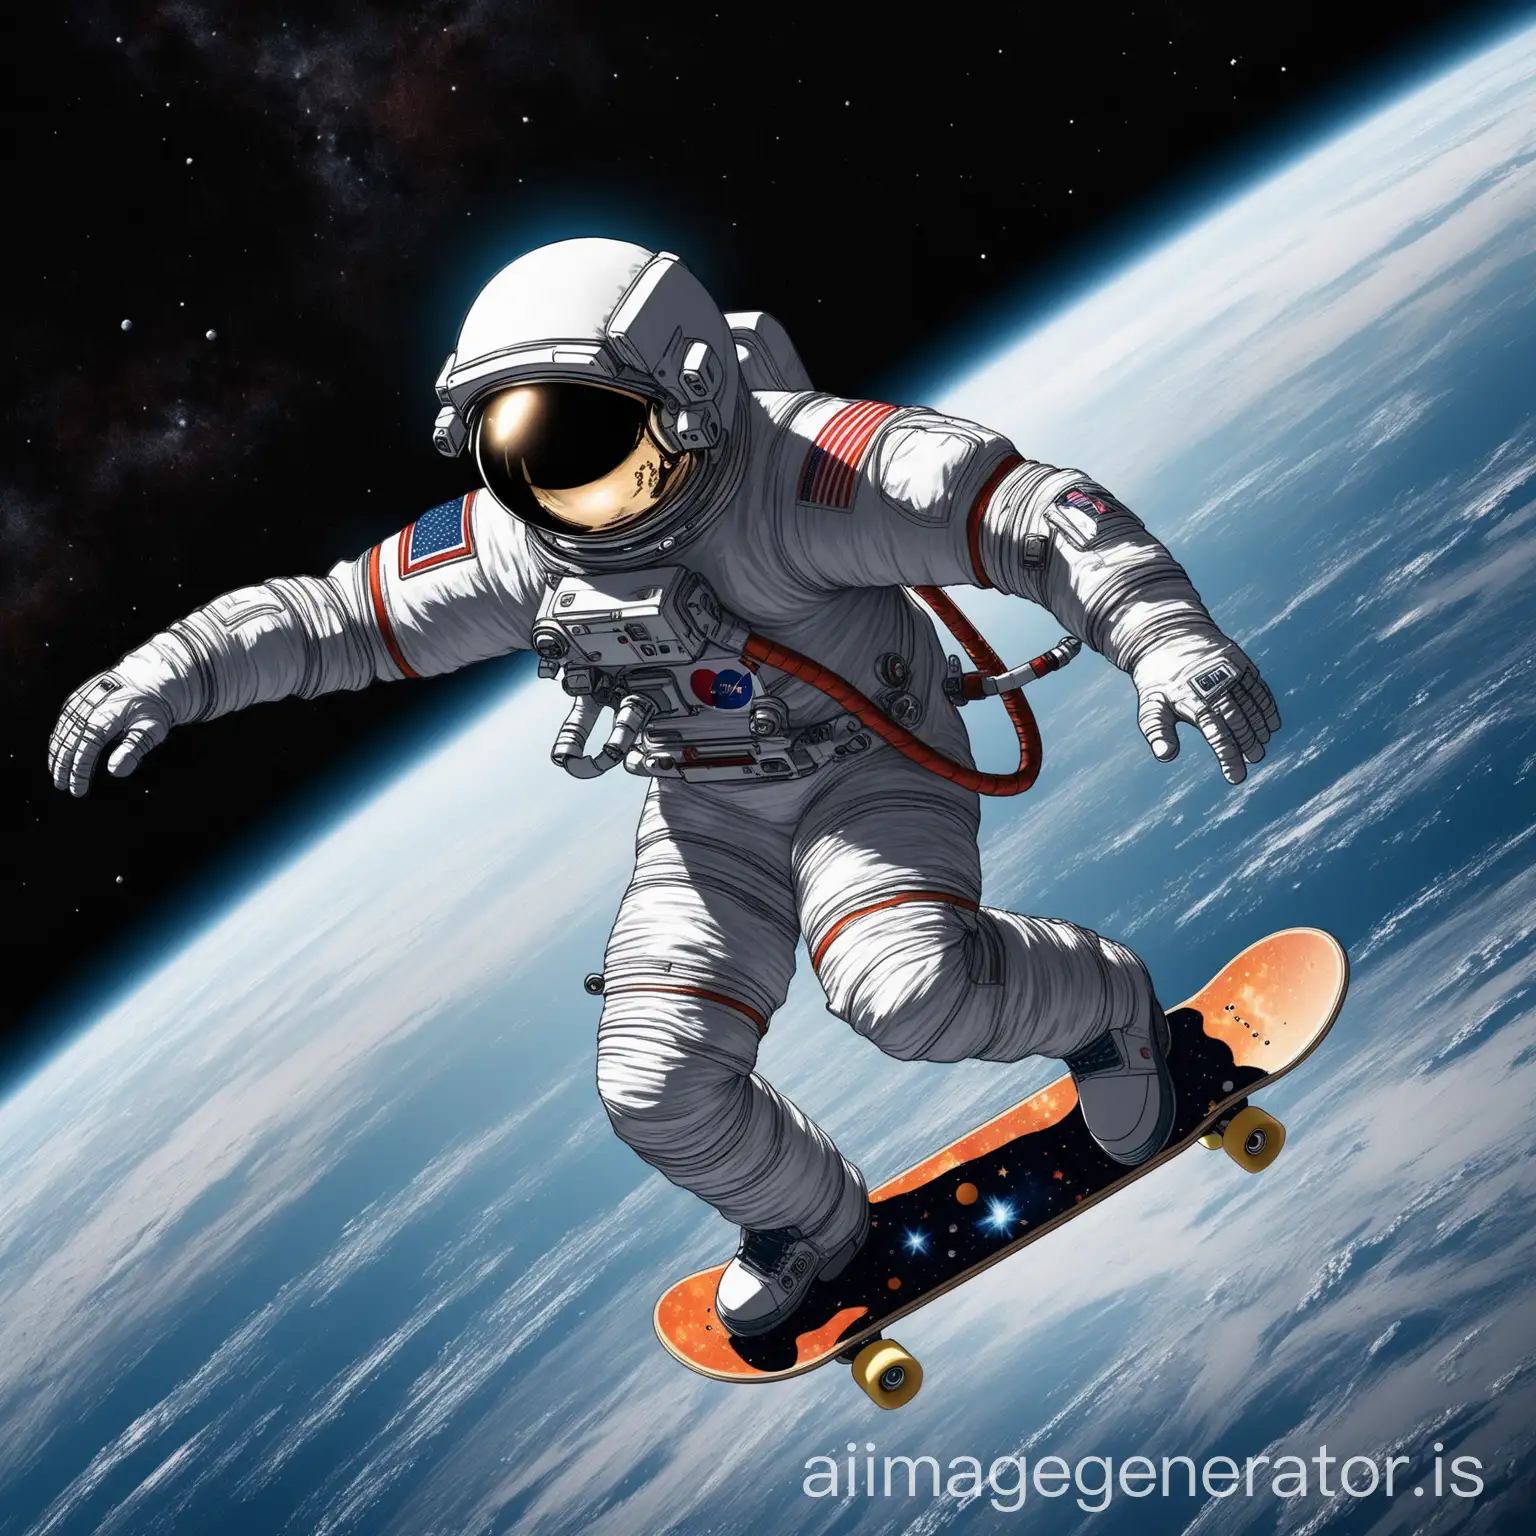 Space-Skating-Astronaut-Riding-Skateboard-in-Zero-Gravity